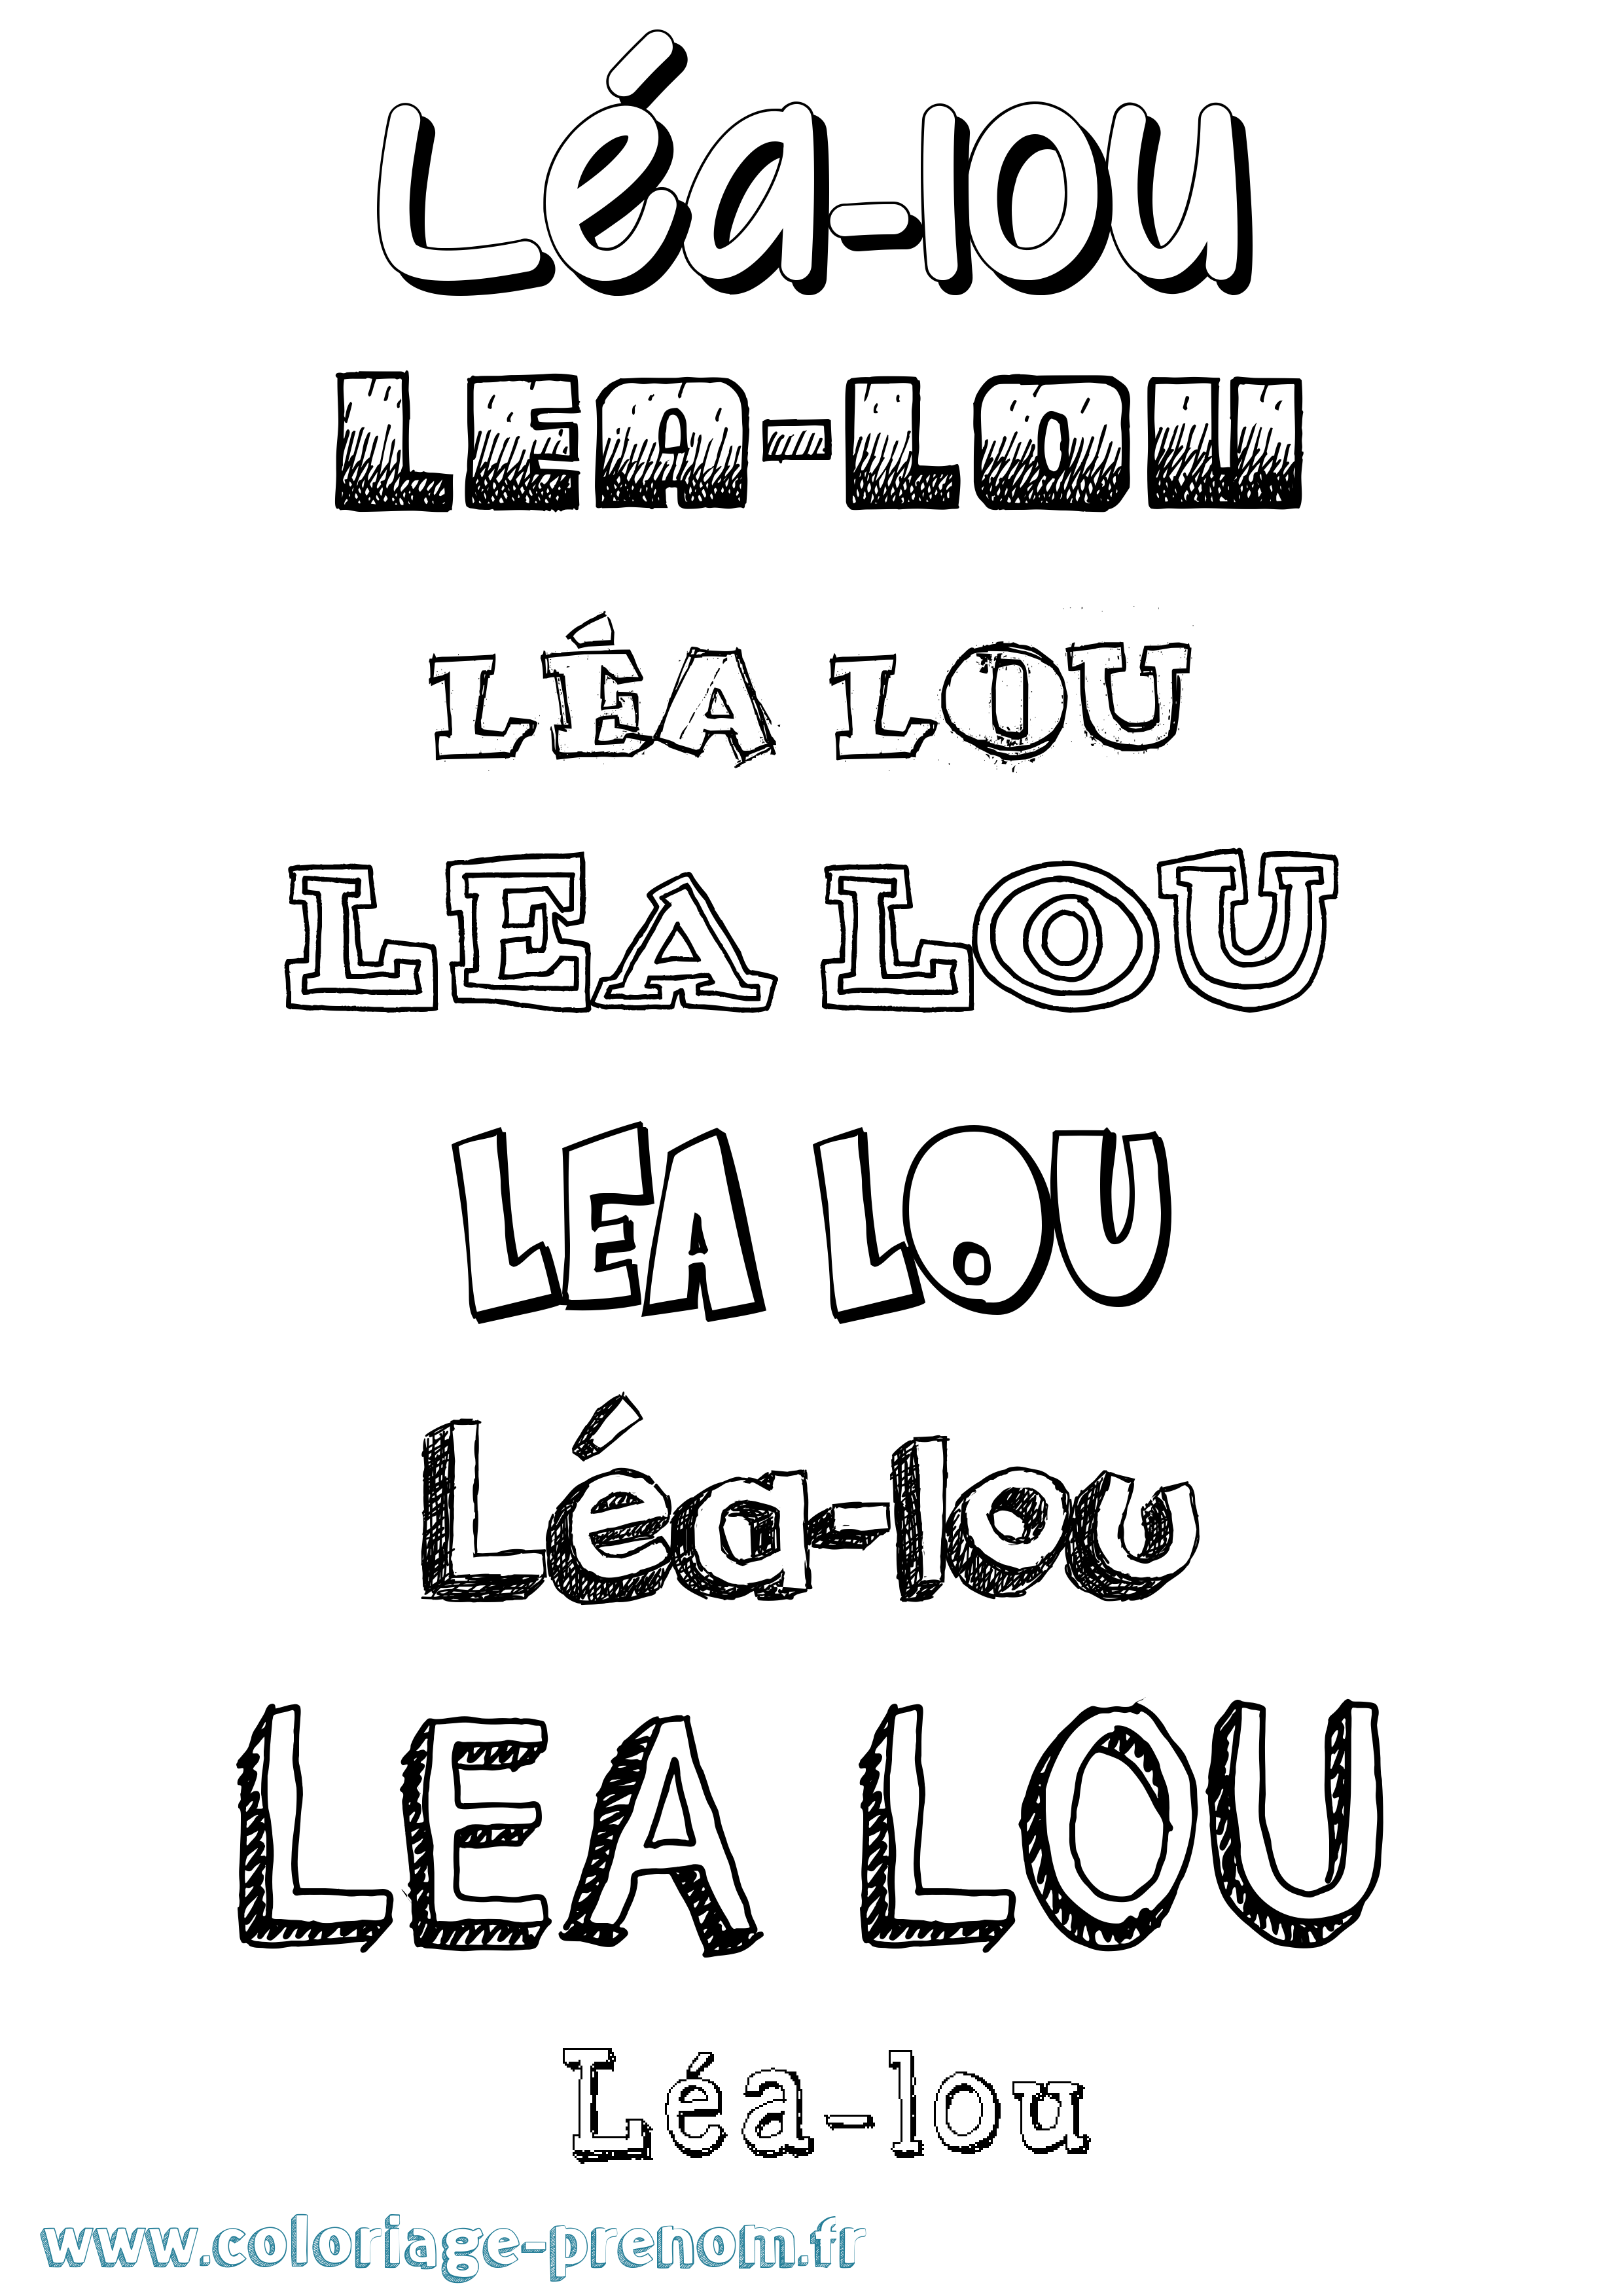 Coloriage prénom Léa-Lou Dessiné